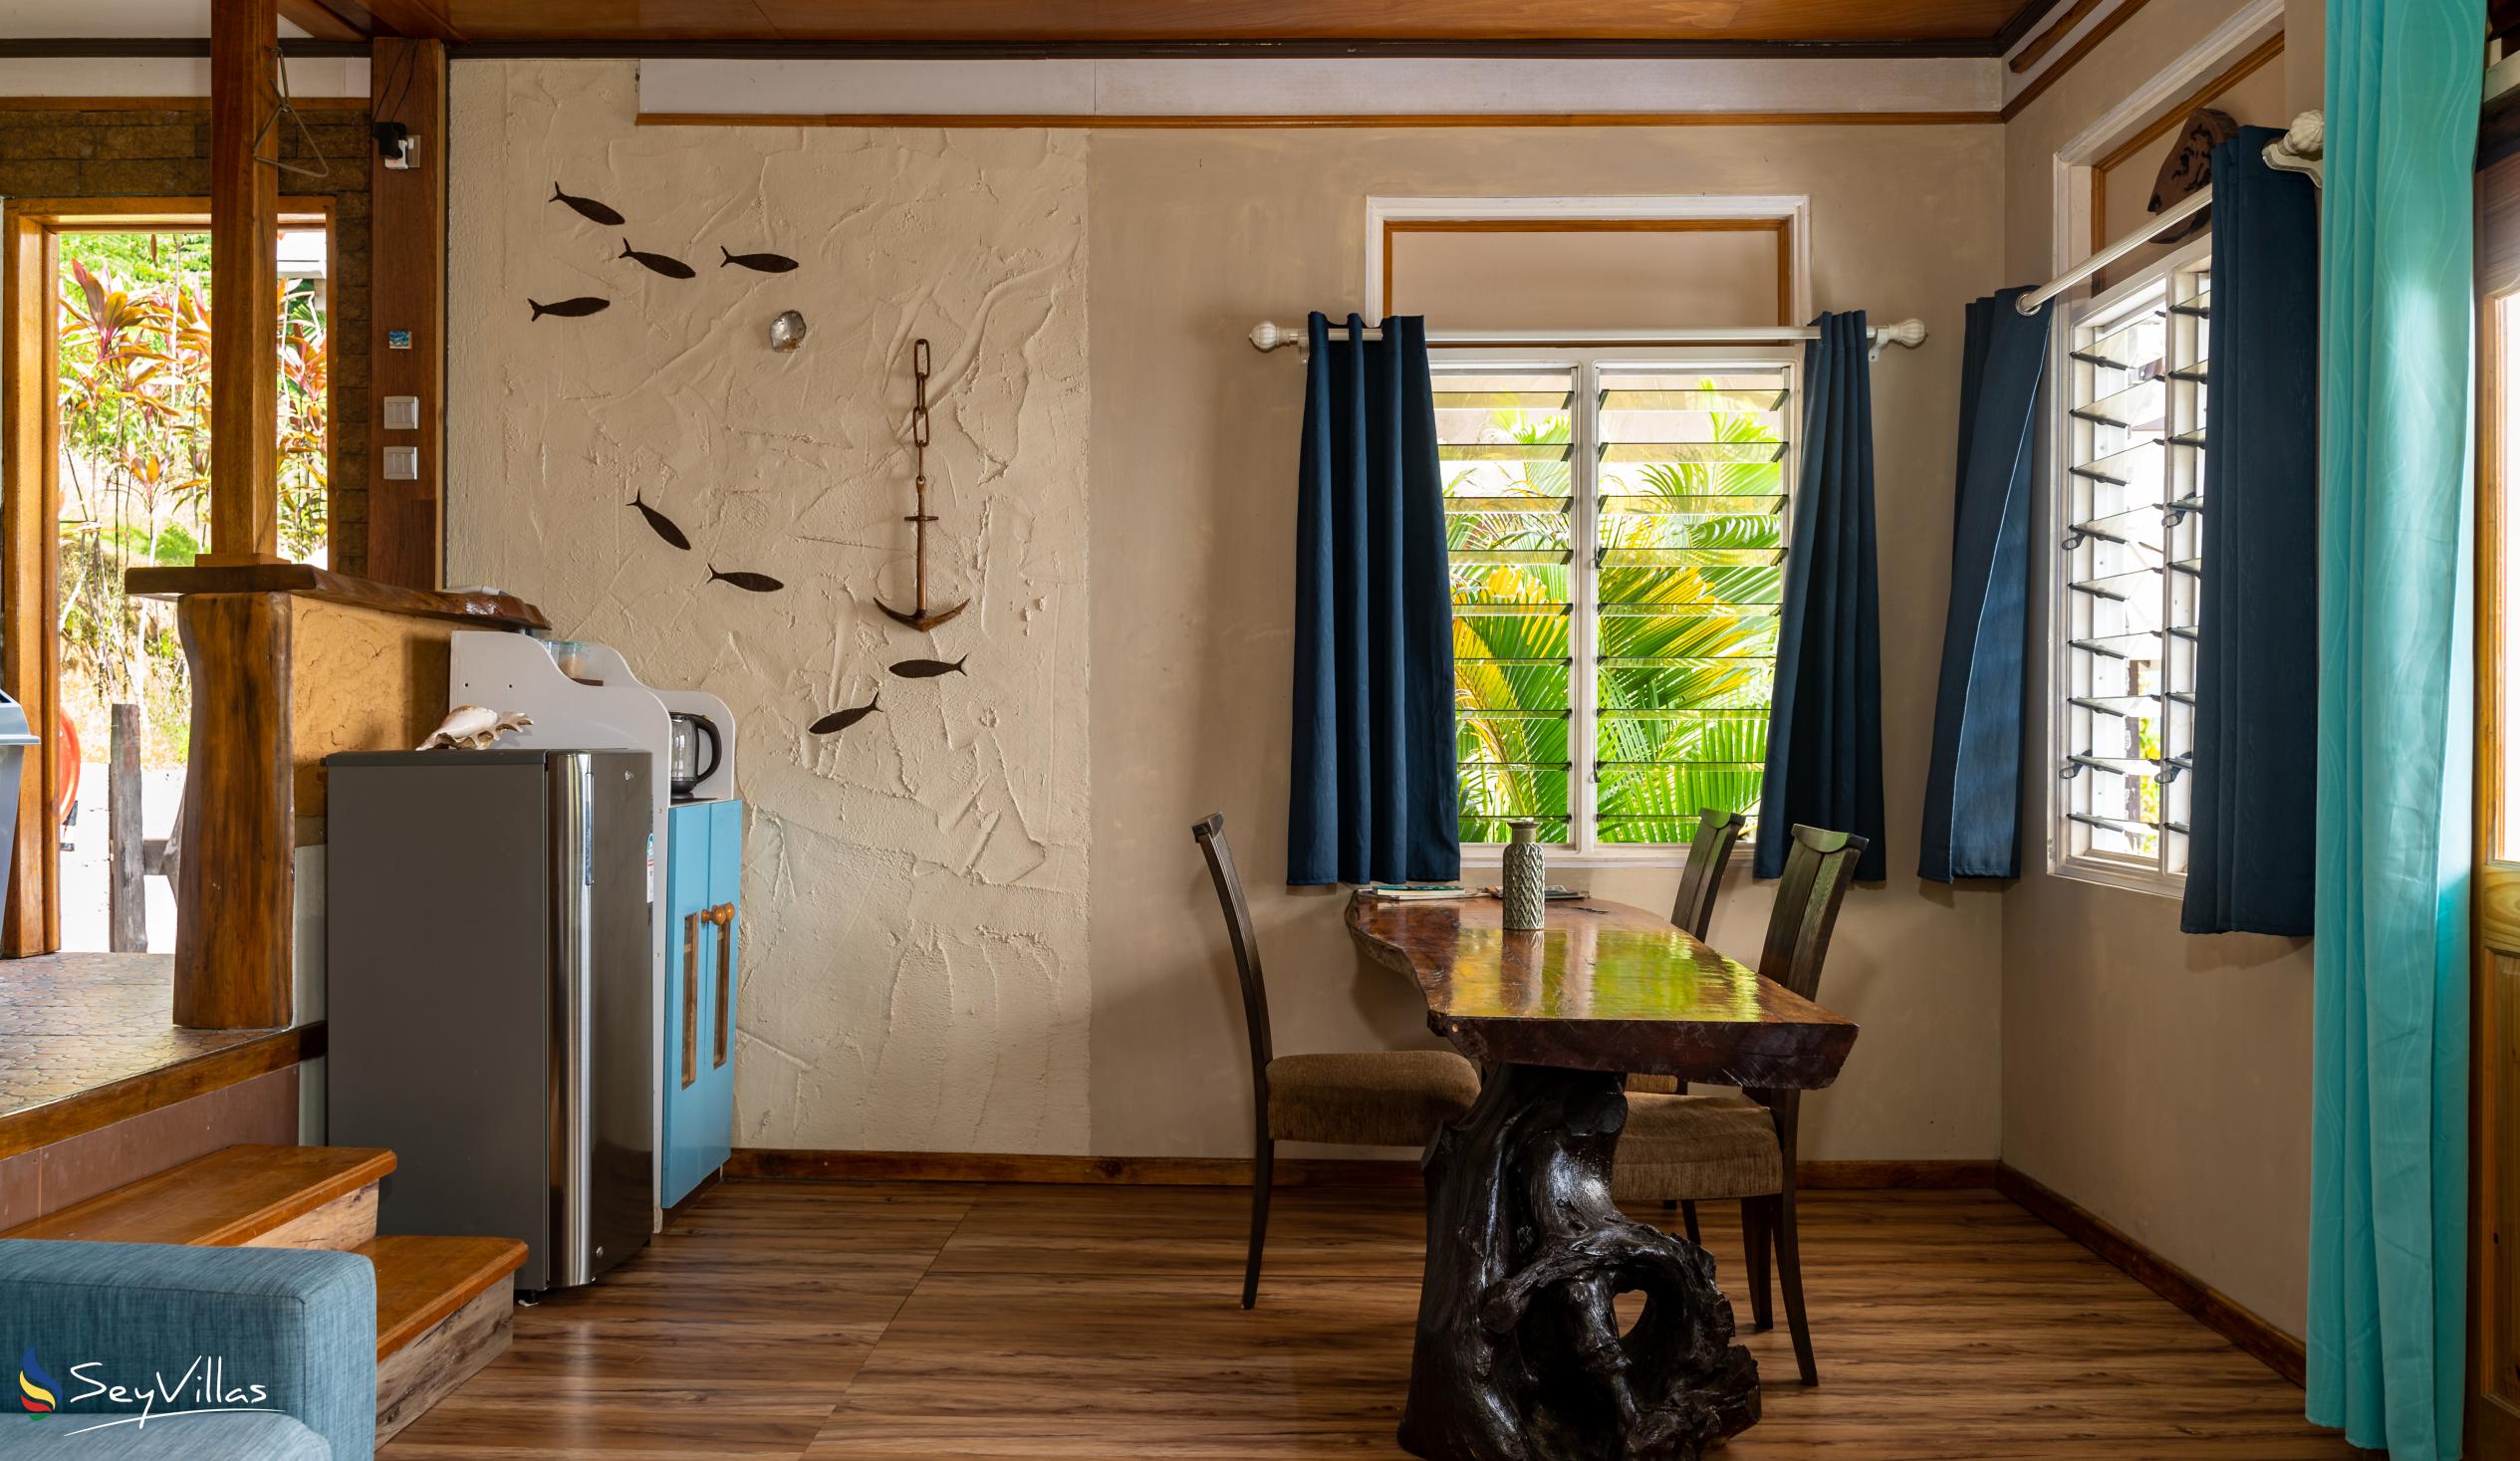 Photo 49: Mouggae Blues Villas - 1-Bedroom Villa - Mahé (Seychelles)